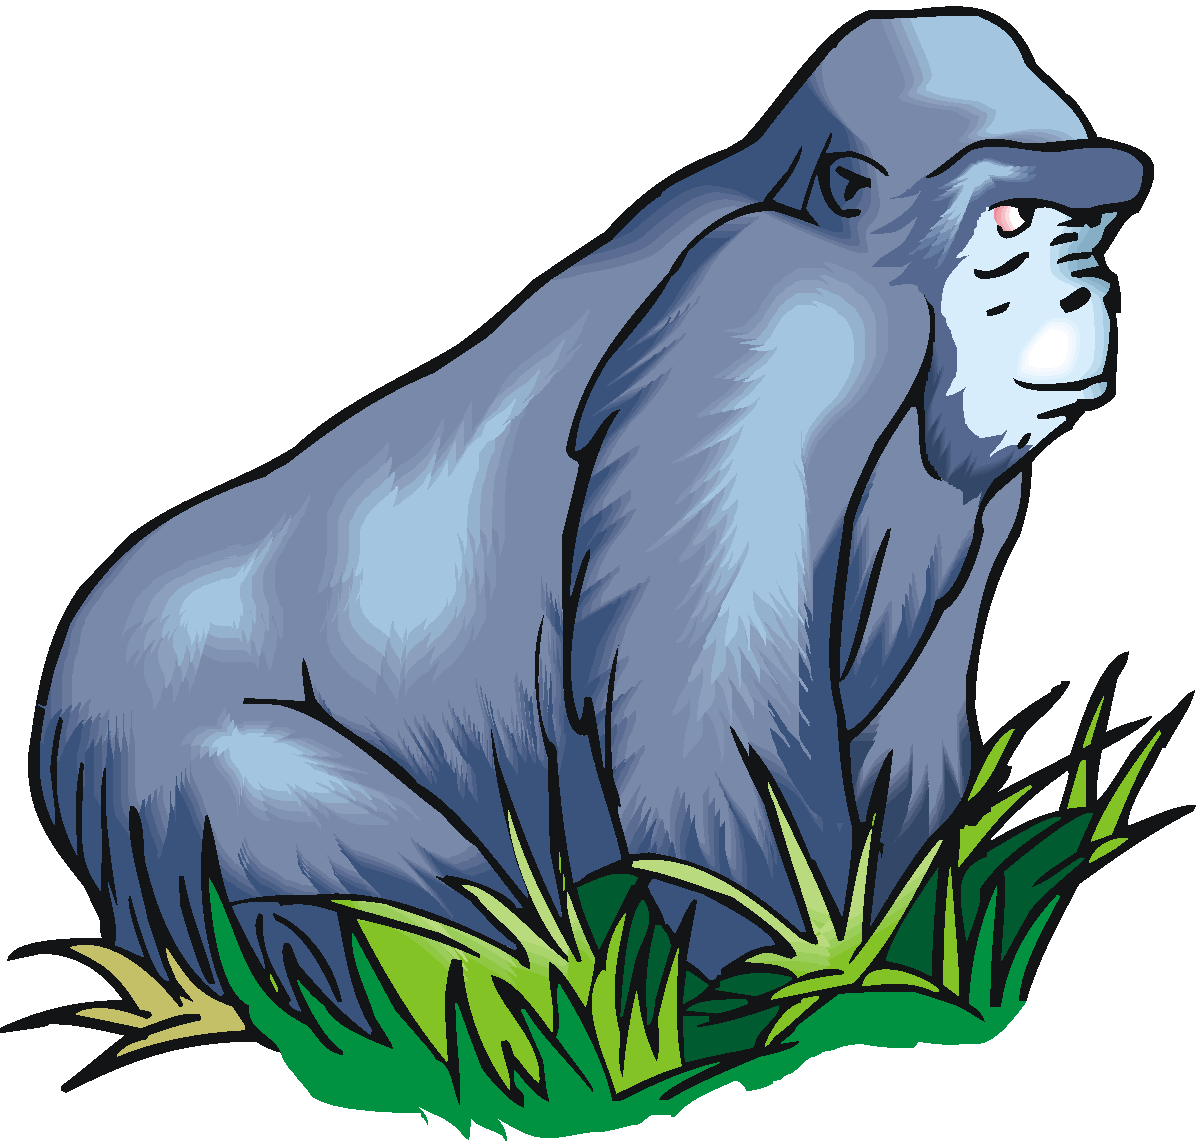 Gorilla Clip Art Cartoon | Clipart library - Free Clipart Images